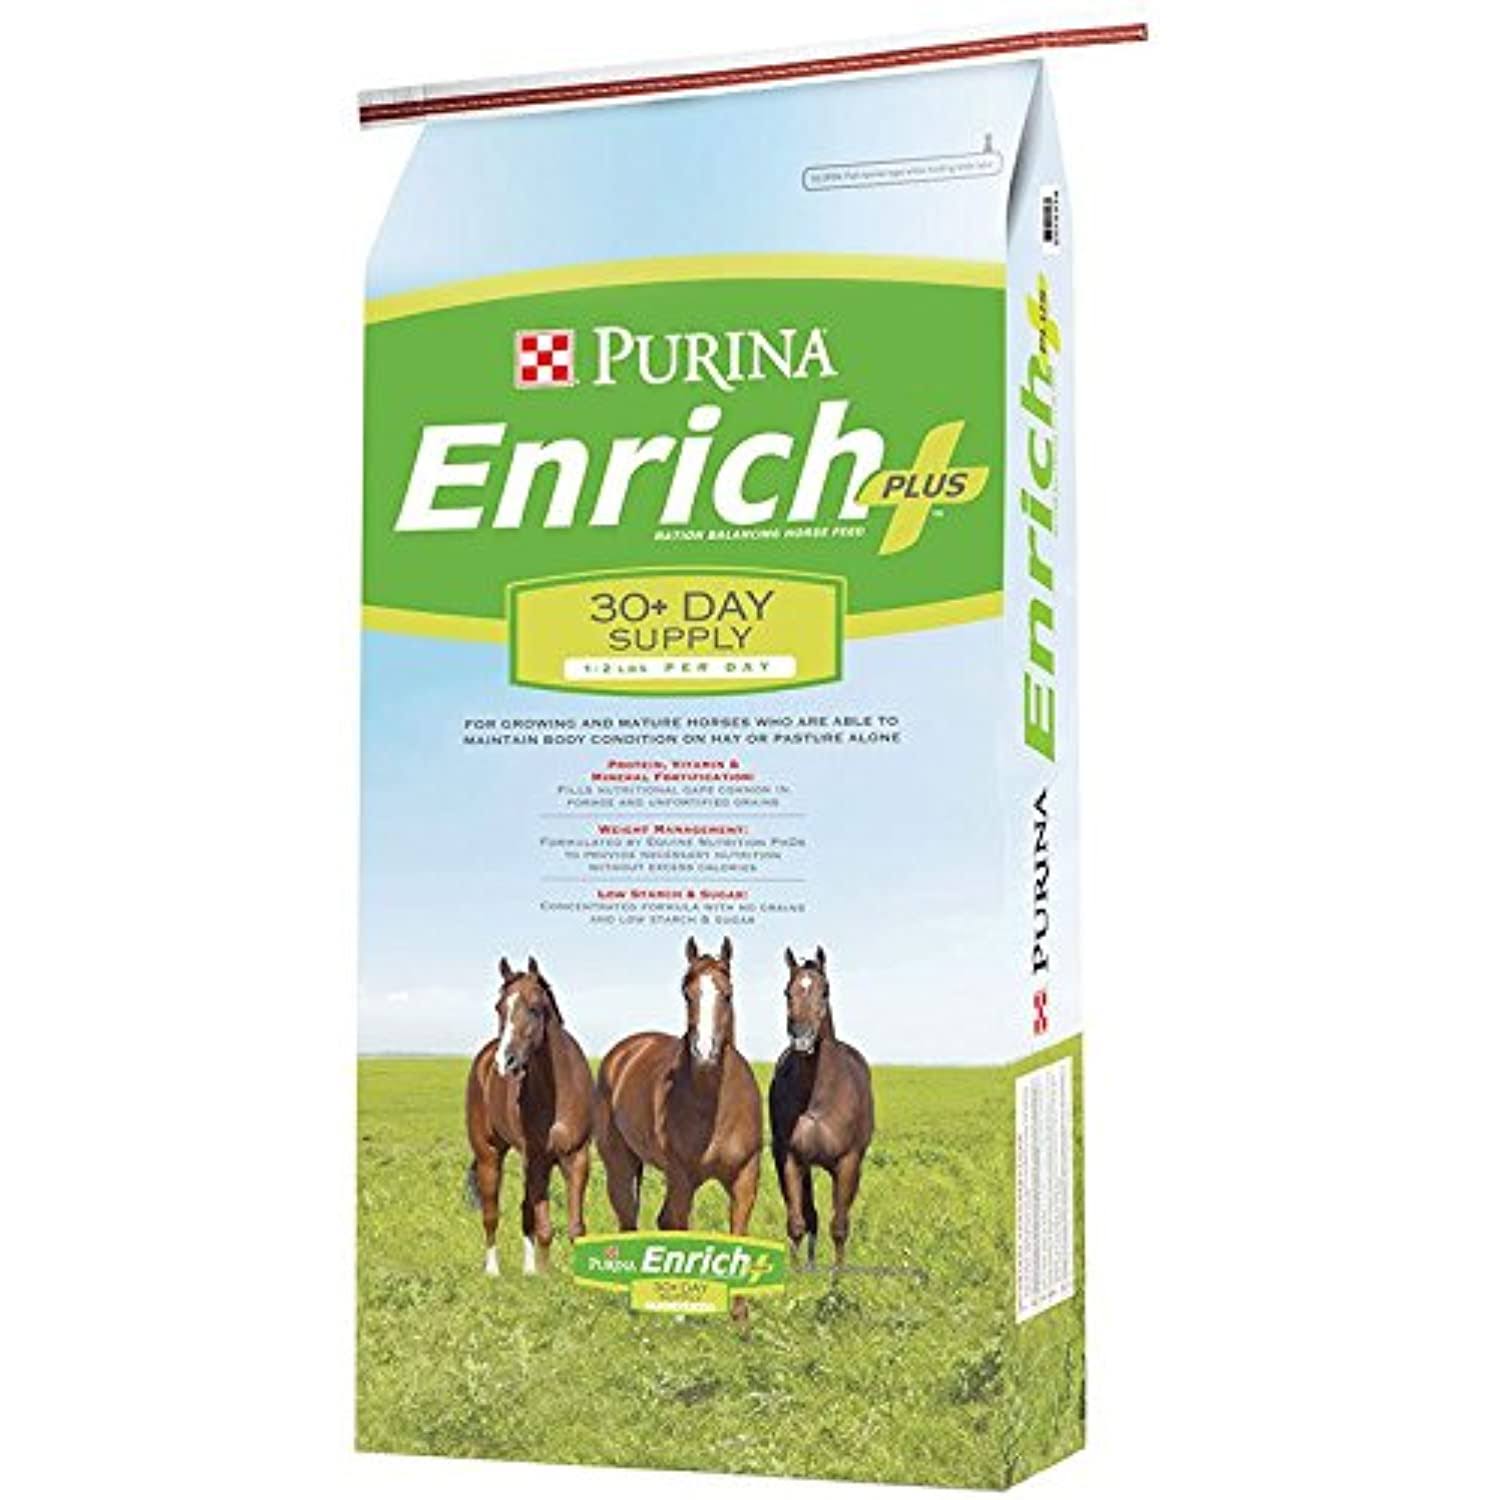 Purina Enrich Plus Ration Balancing FEED, 50 lb.